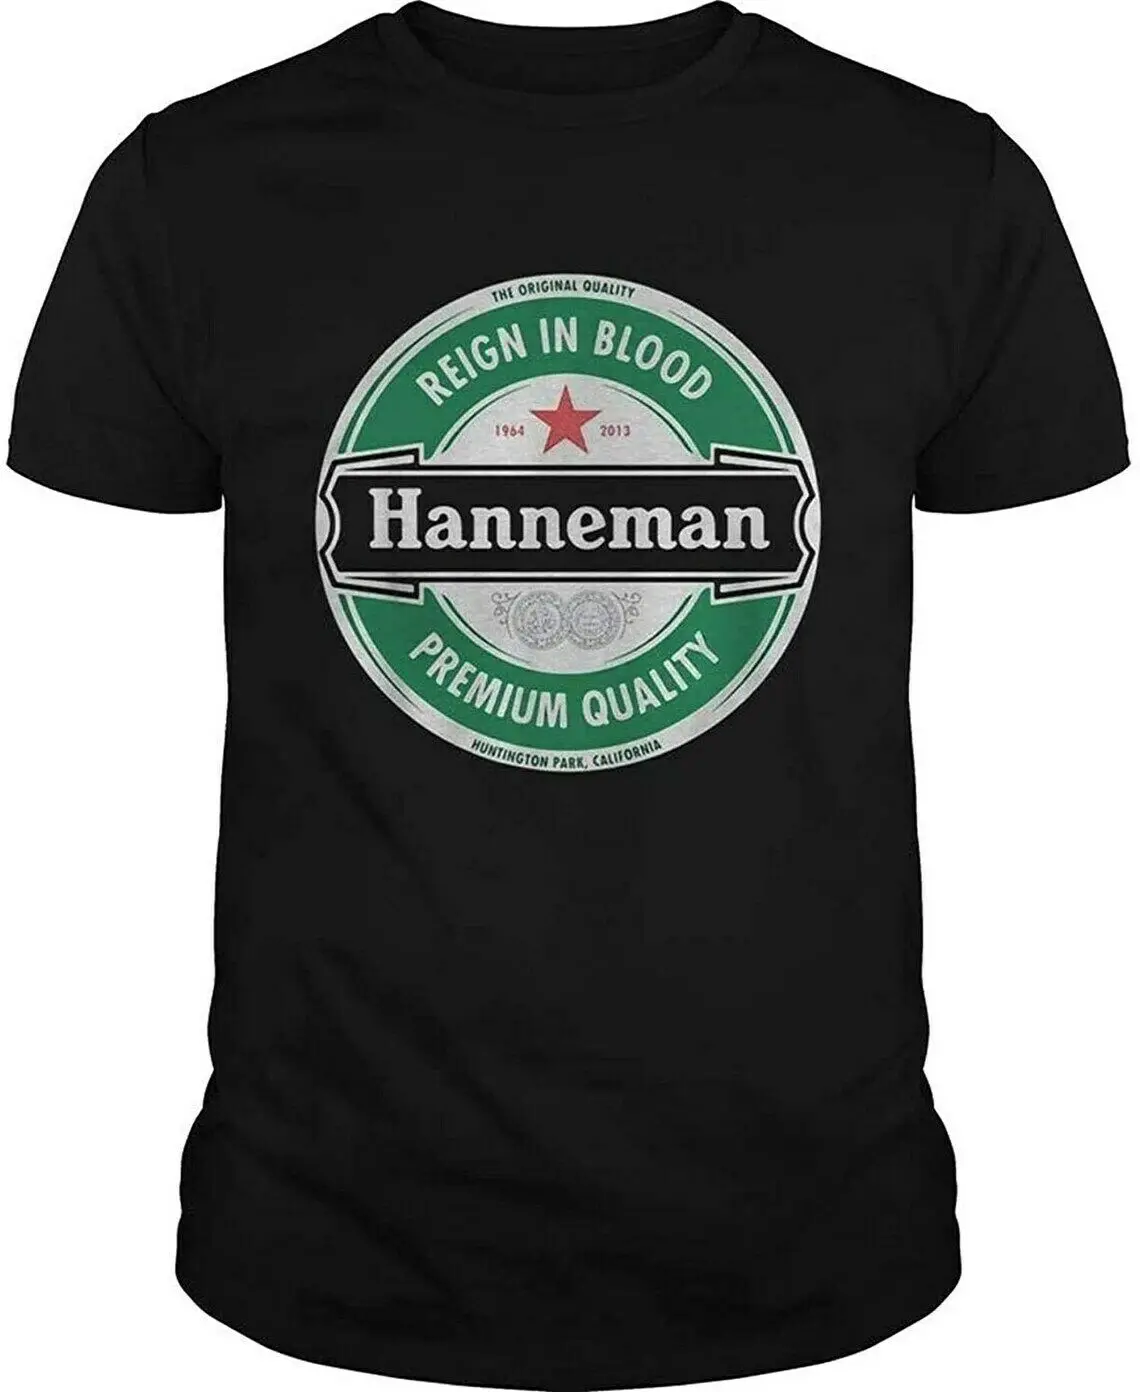 

Hanneman Reign in Blood Jeff Hanneman Slayer Premium Quality T Shirt Full Size